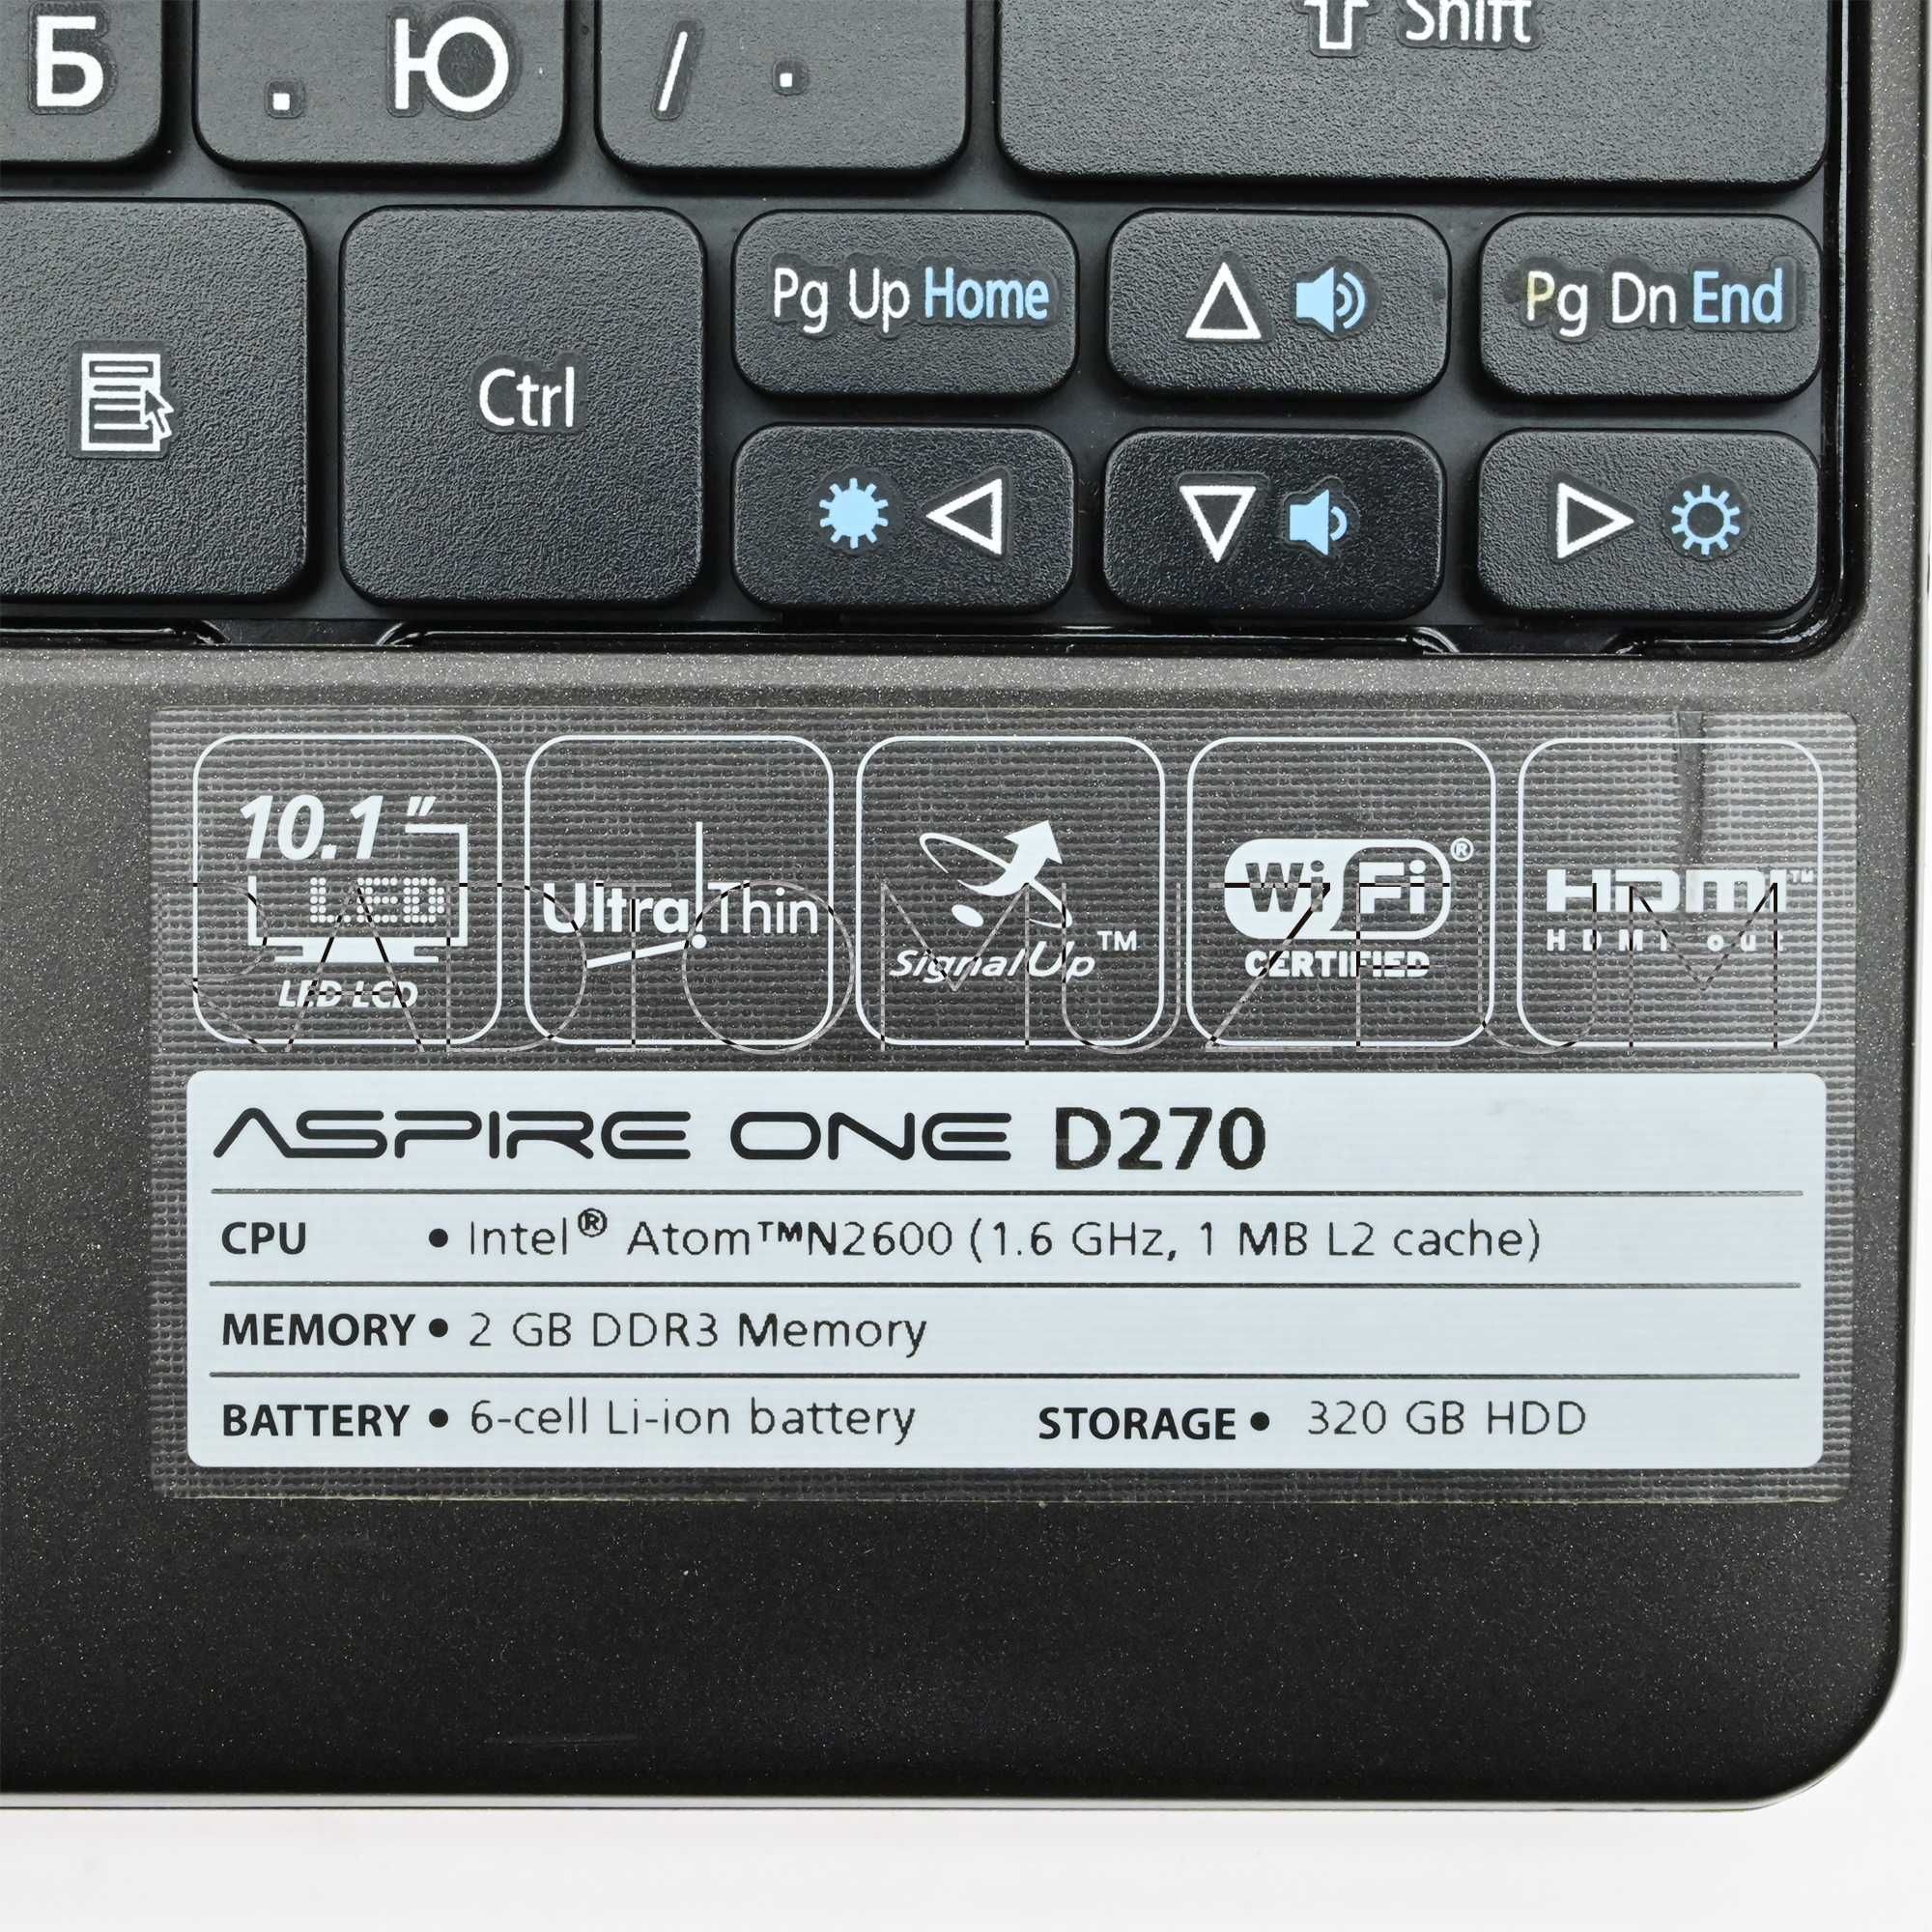 Нетбук Acer Aspire One D270, дуже гарний стан, справний, батареї слаба